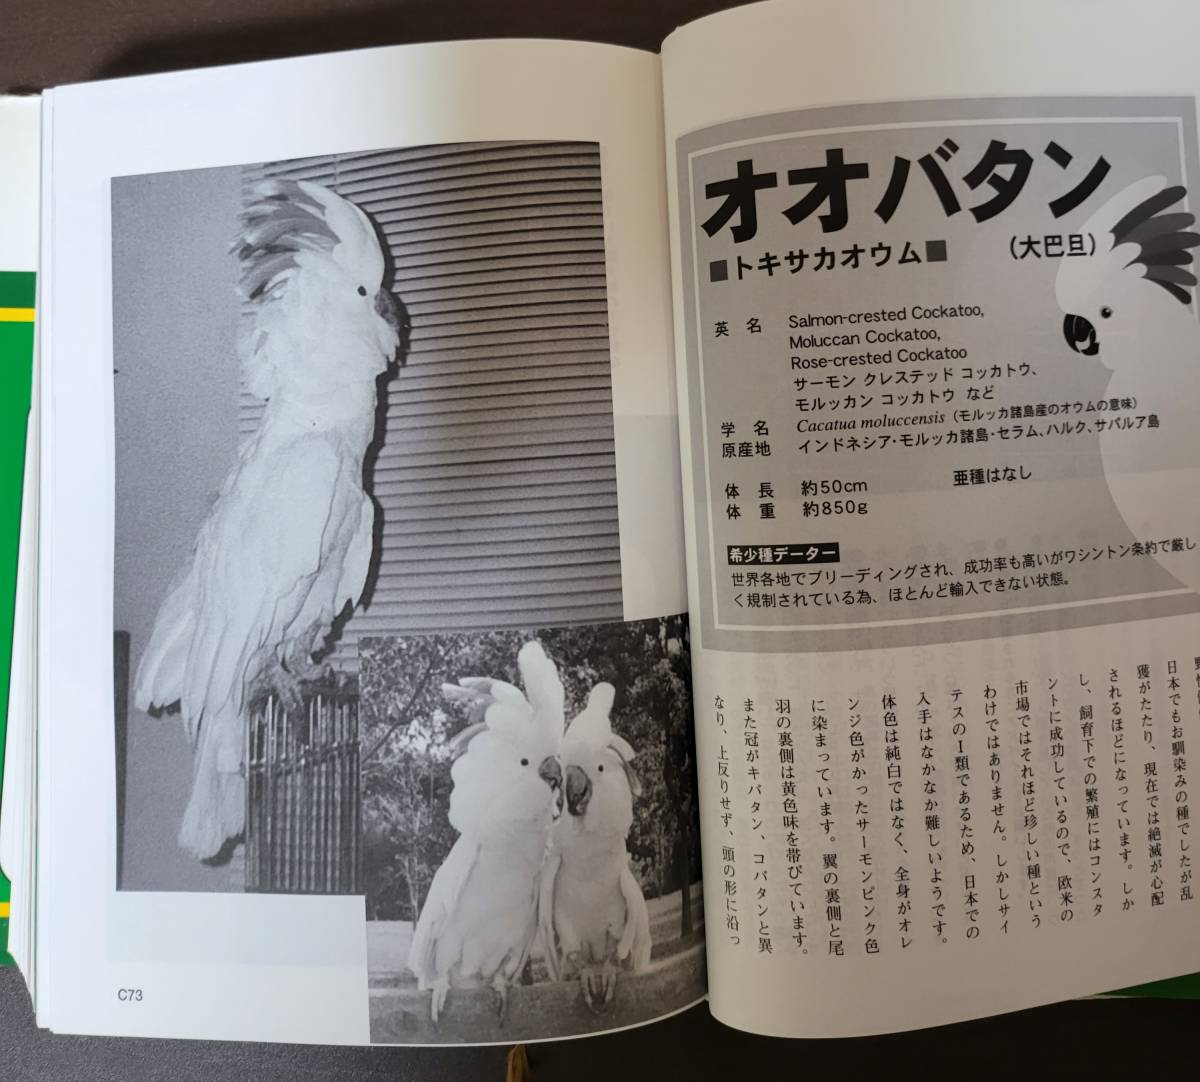  large parakeet. book@1999/10/1. see peace line ( work ) parakeet parrot 